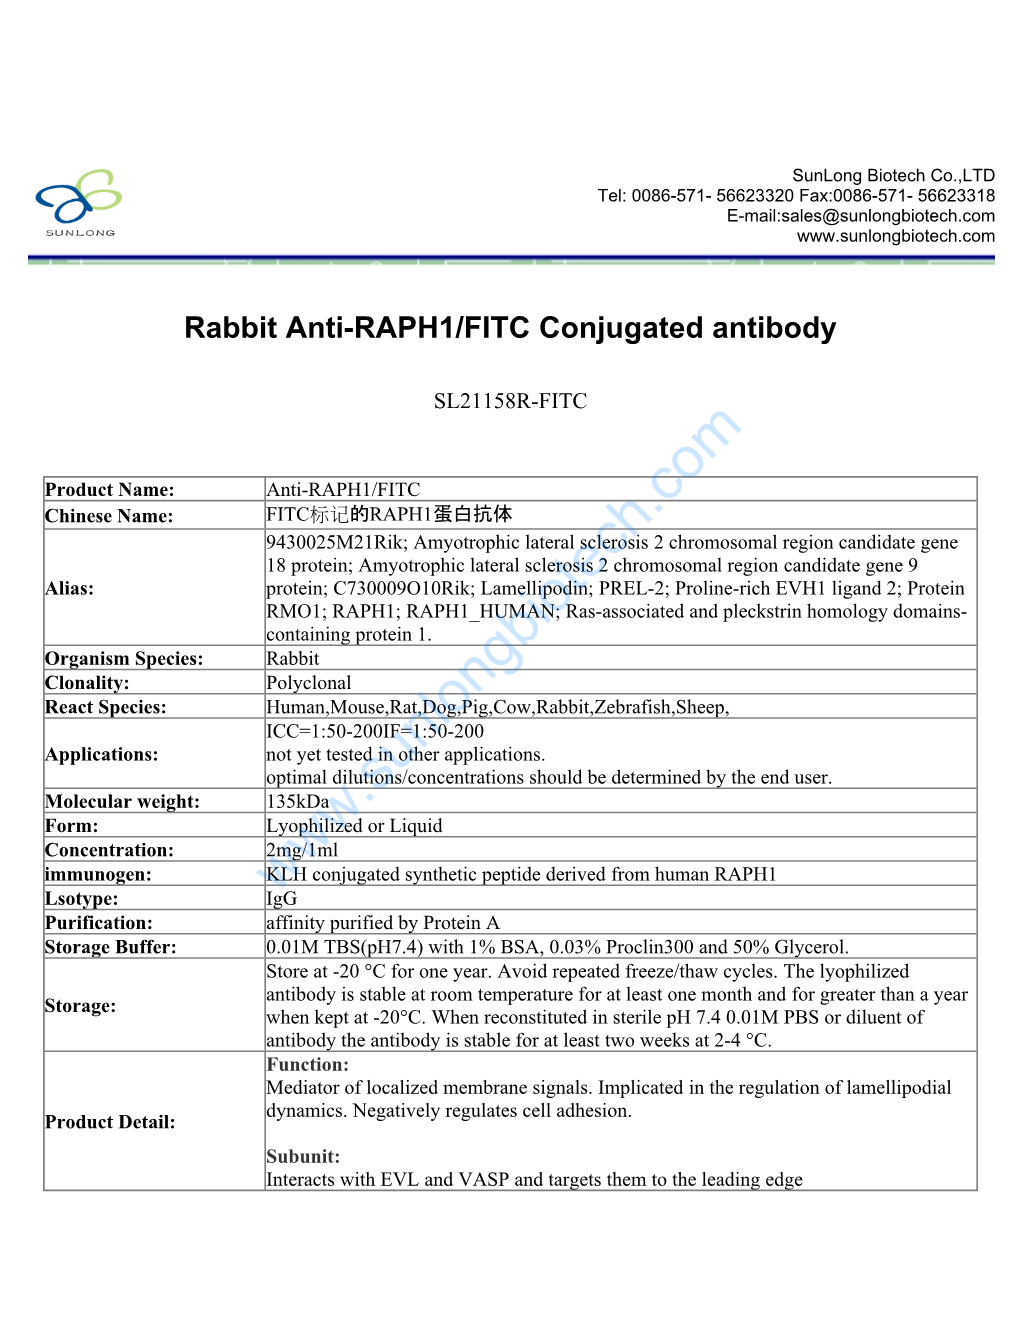 Rabbit Anti-RAPH1/FITC Conjugated Antibody-SL21158R-FITC